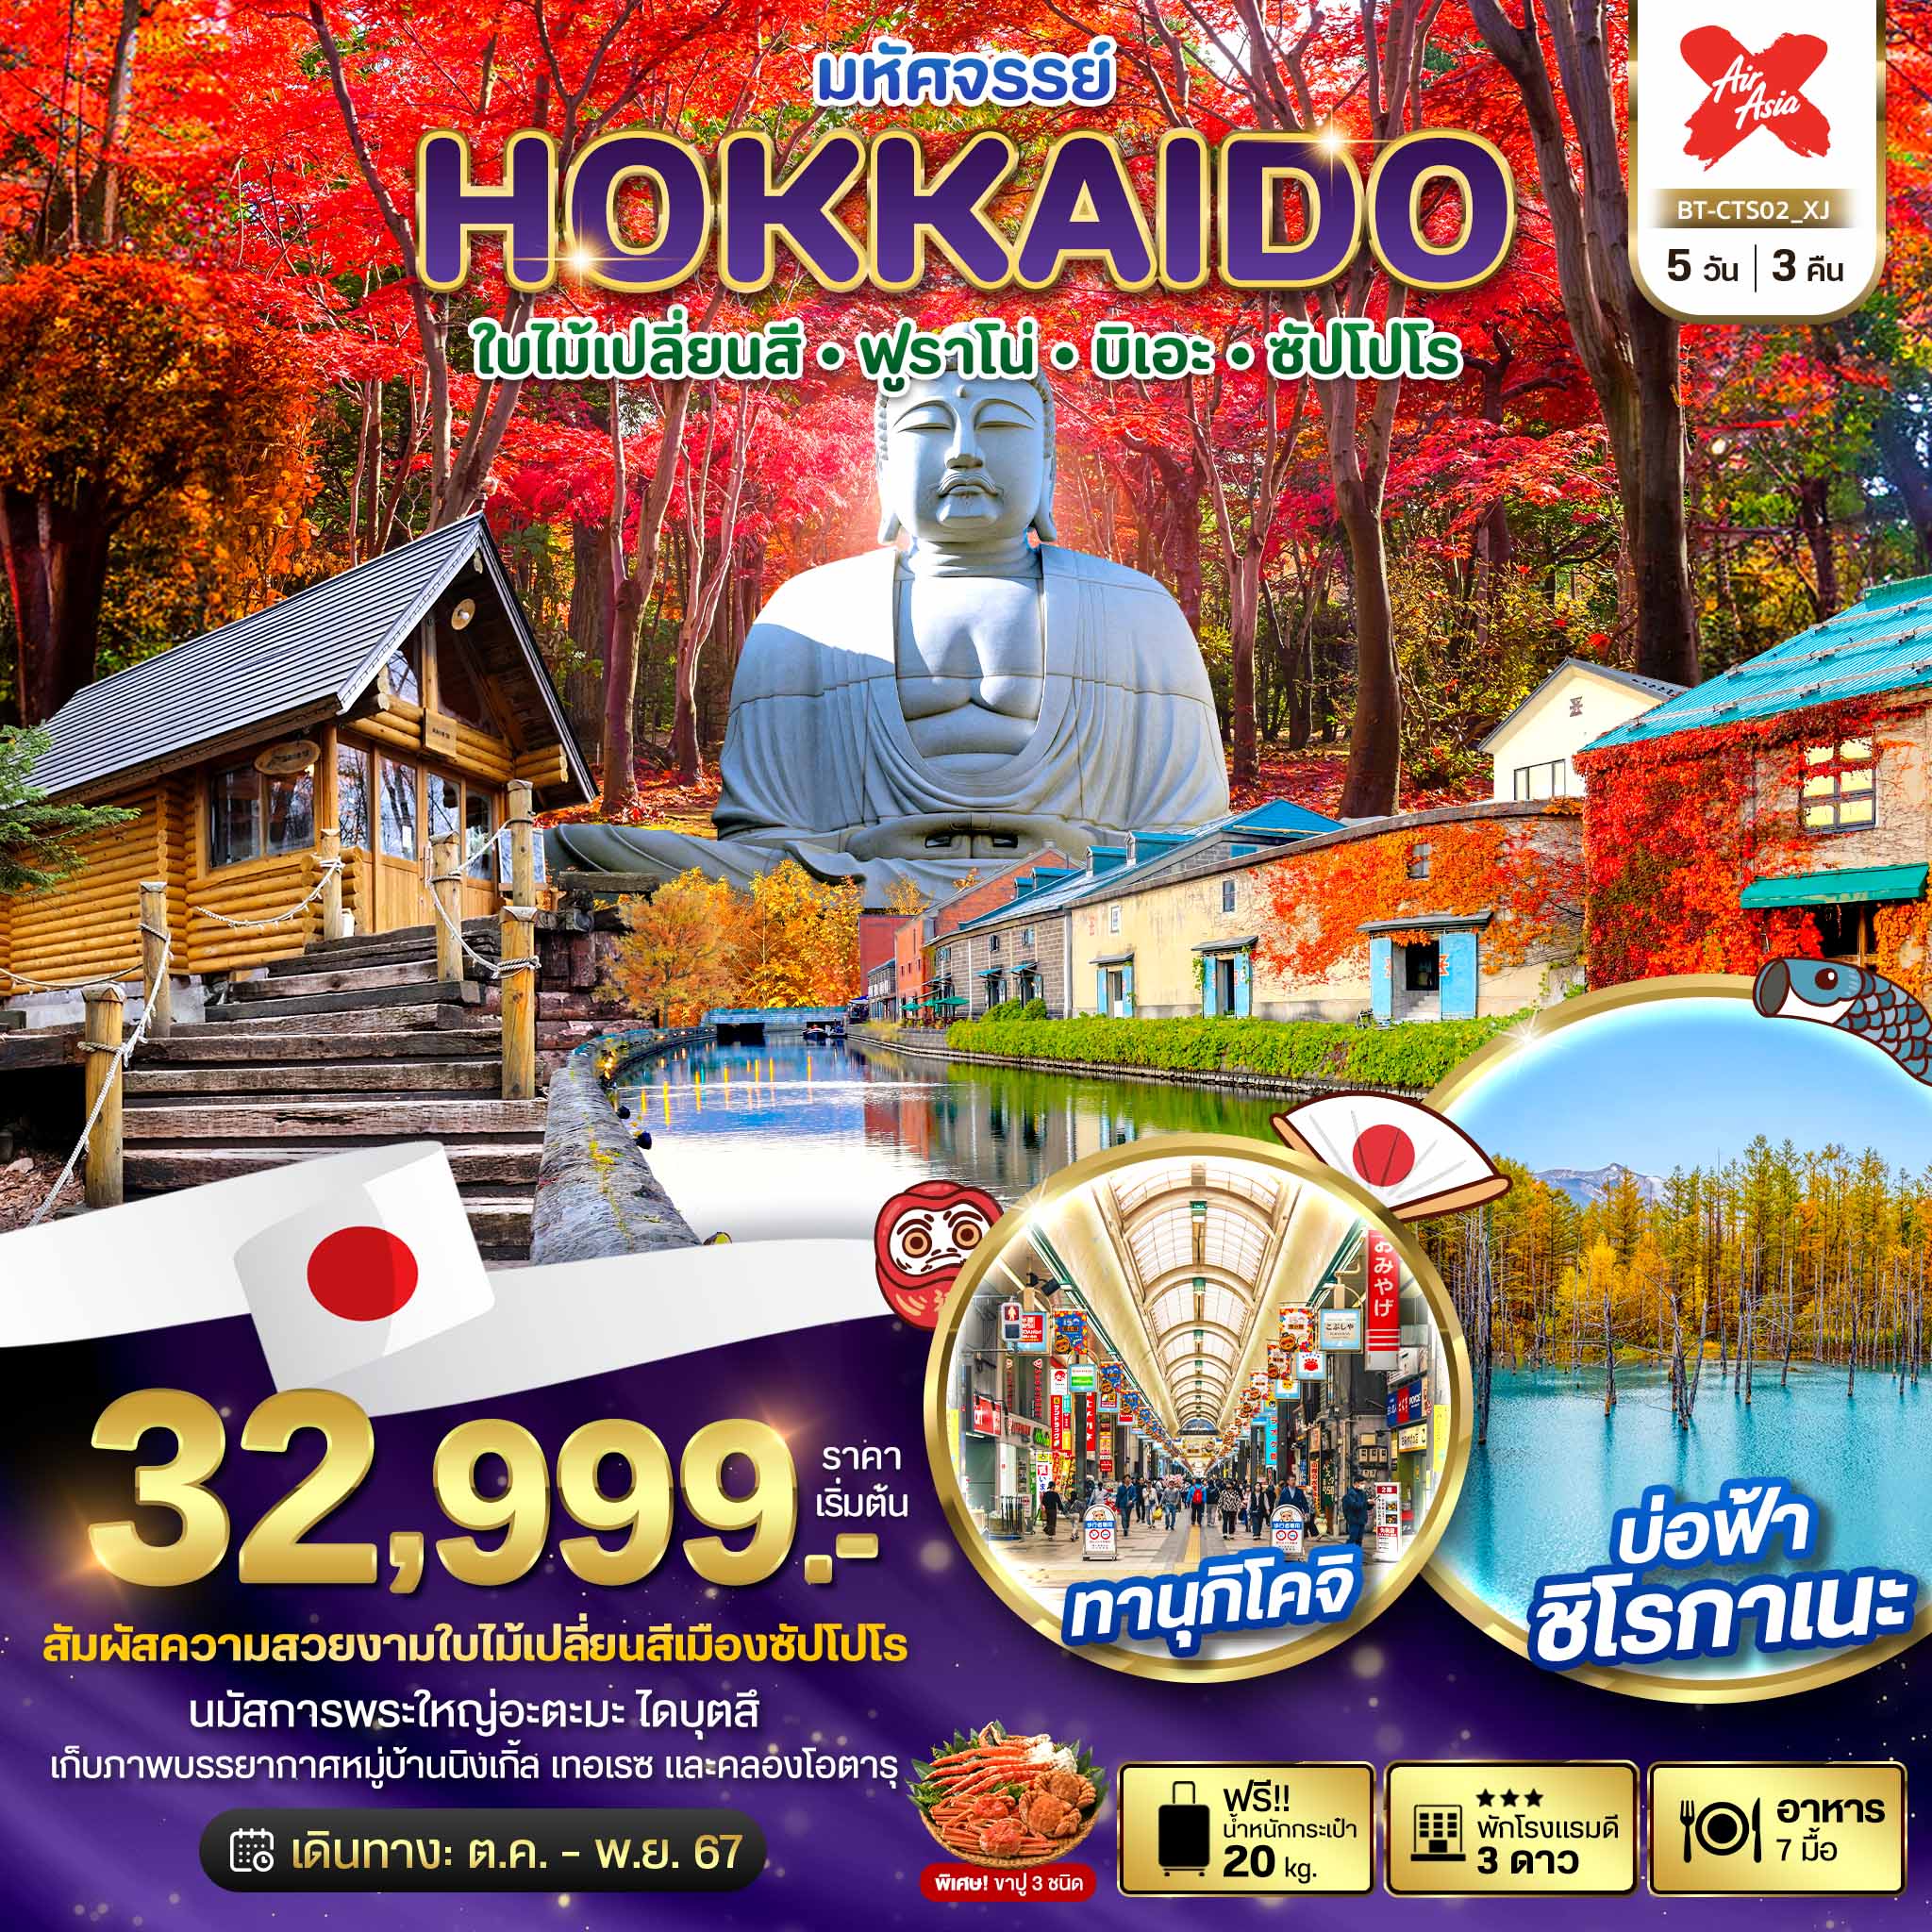 HOKKAIDO ฮอกไกโด ฟูราโน่ บิเอะ ซัปโปโร 5 วัน 3 คืน เดินทาง ตุลาคม - พฤศจิกายน 67 เริ่มต้น 32,999.- Air Asia X (XJ)